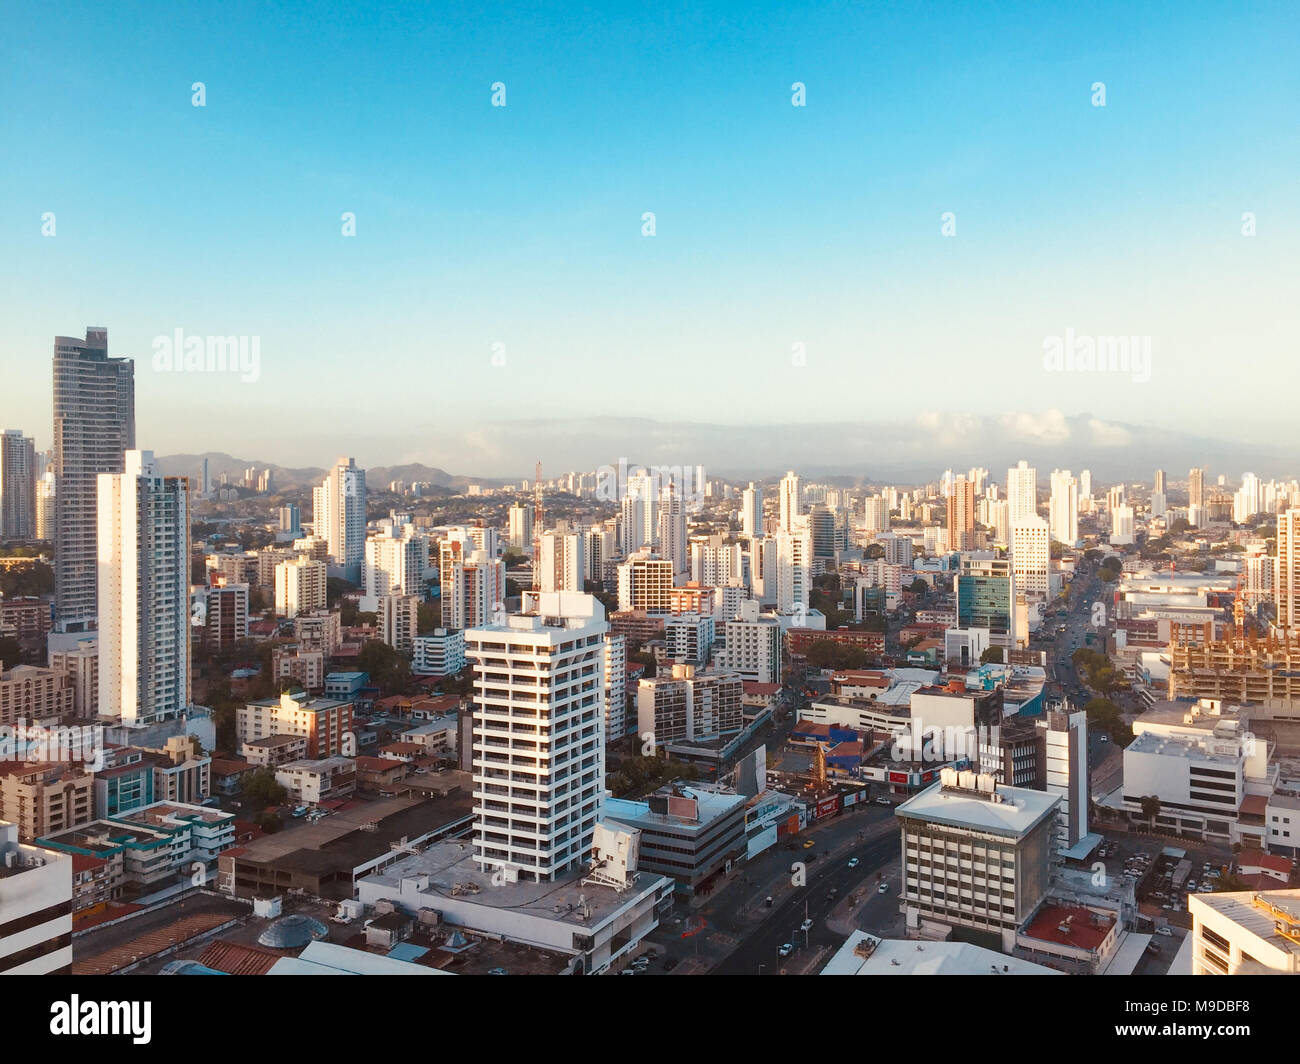 Panama City Skyline - die moderne Skyline der Stadt - Hochhaus Gebäude Panorama - Stockfoto